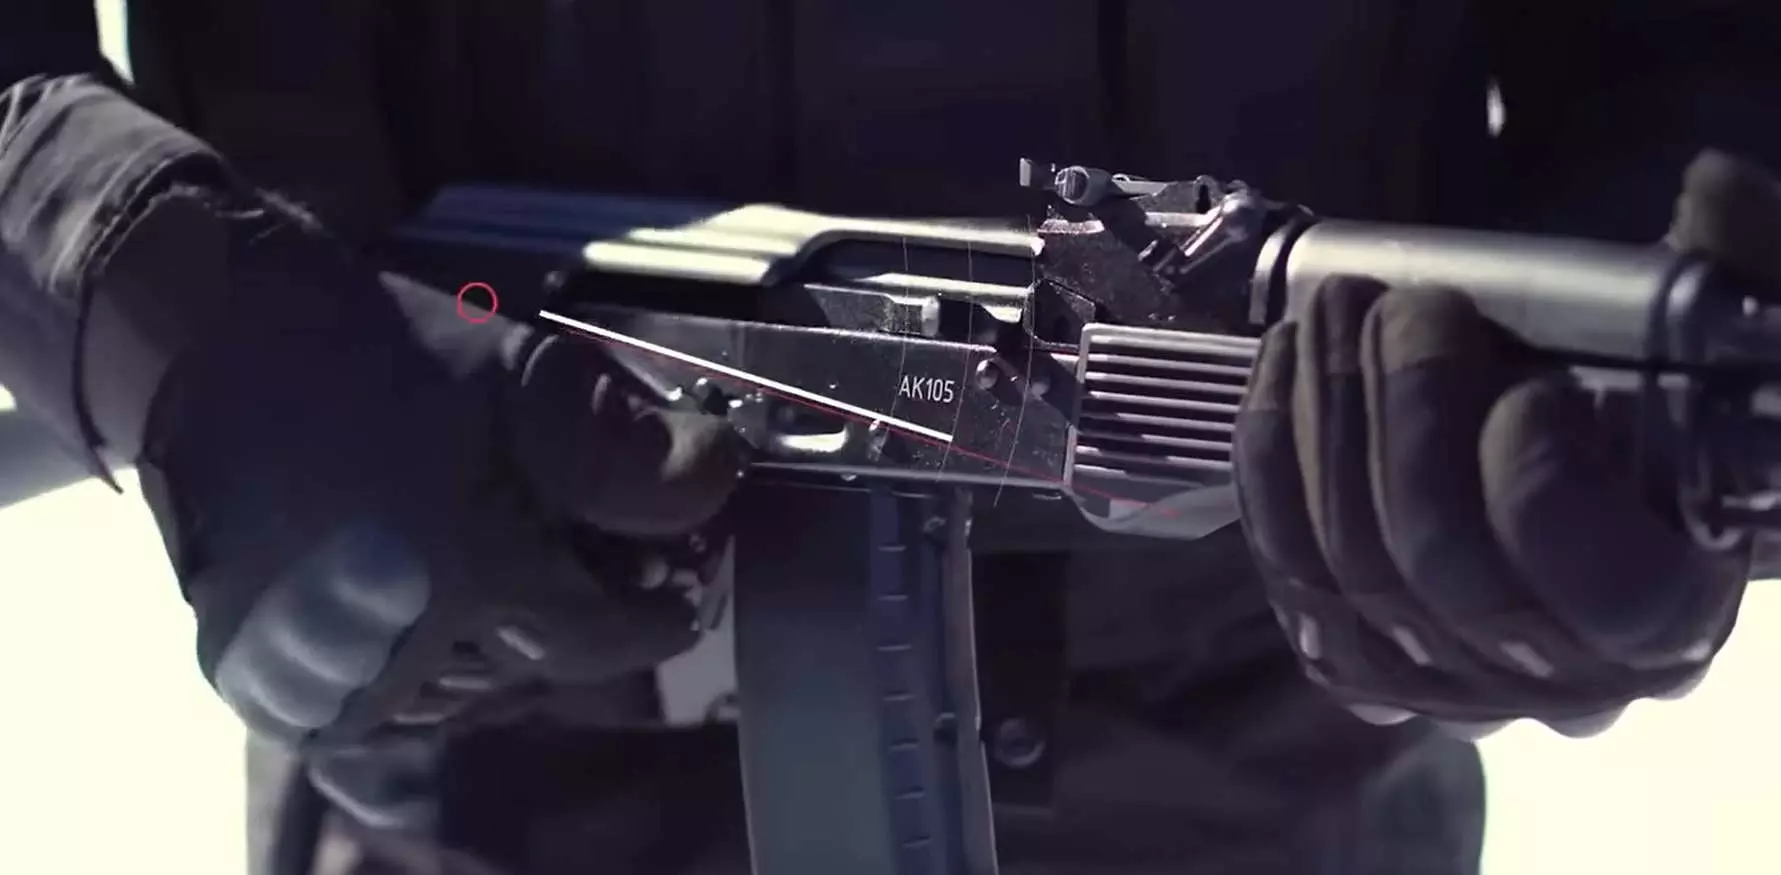 AK  laser tag rifle fire mode lever auto position